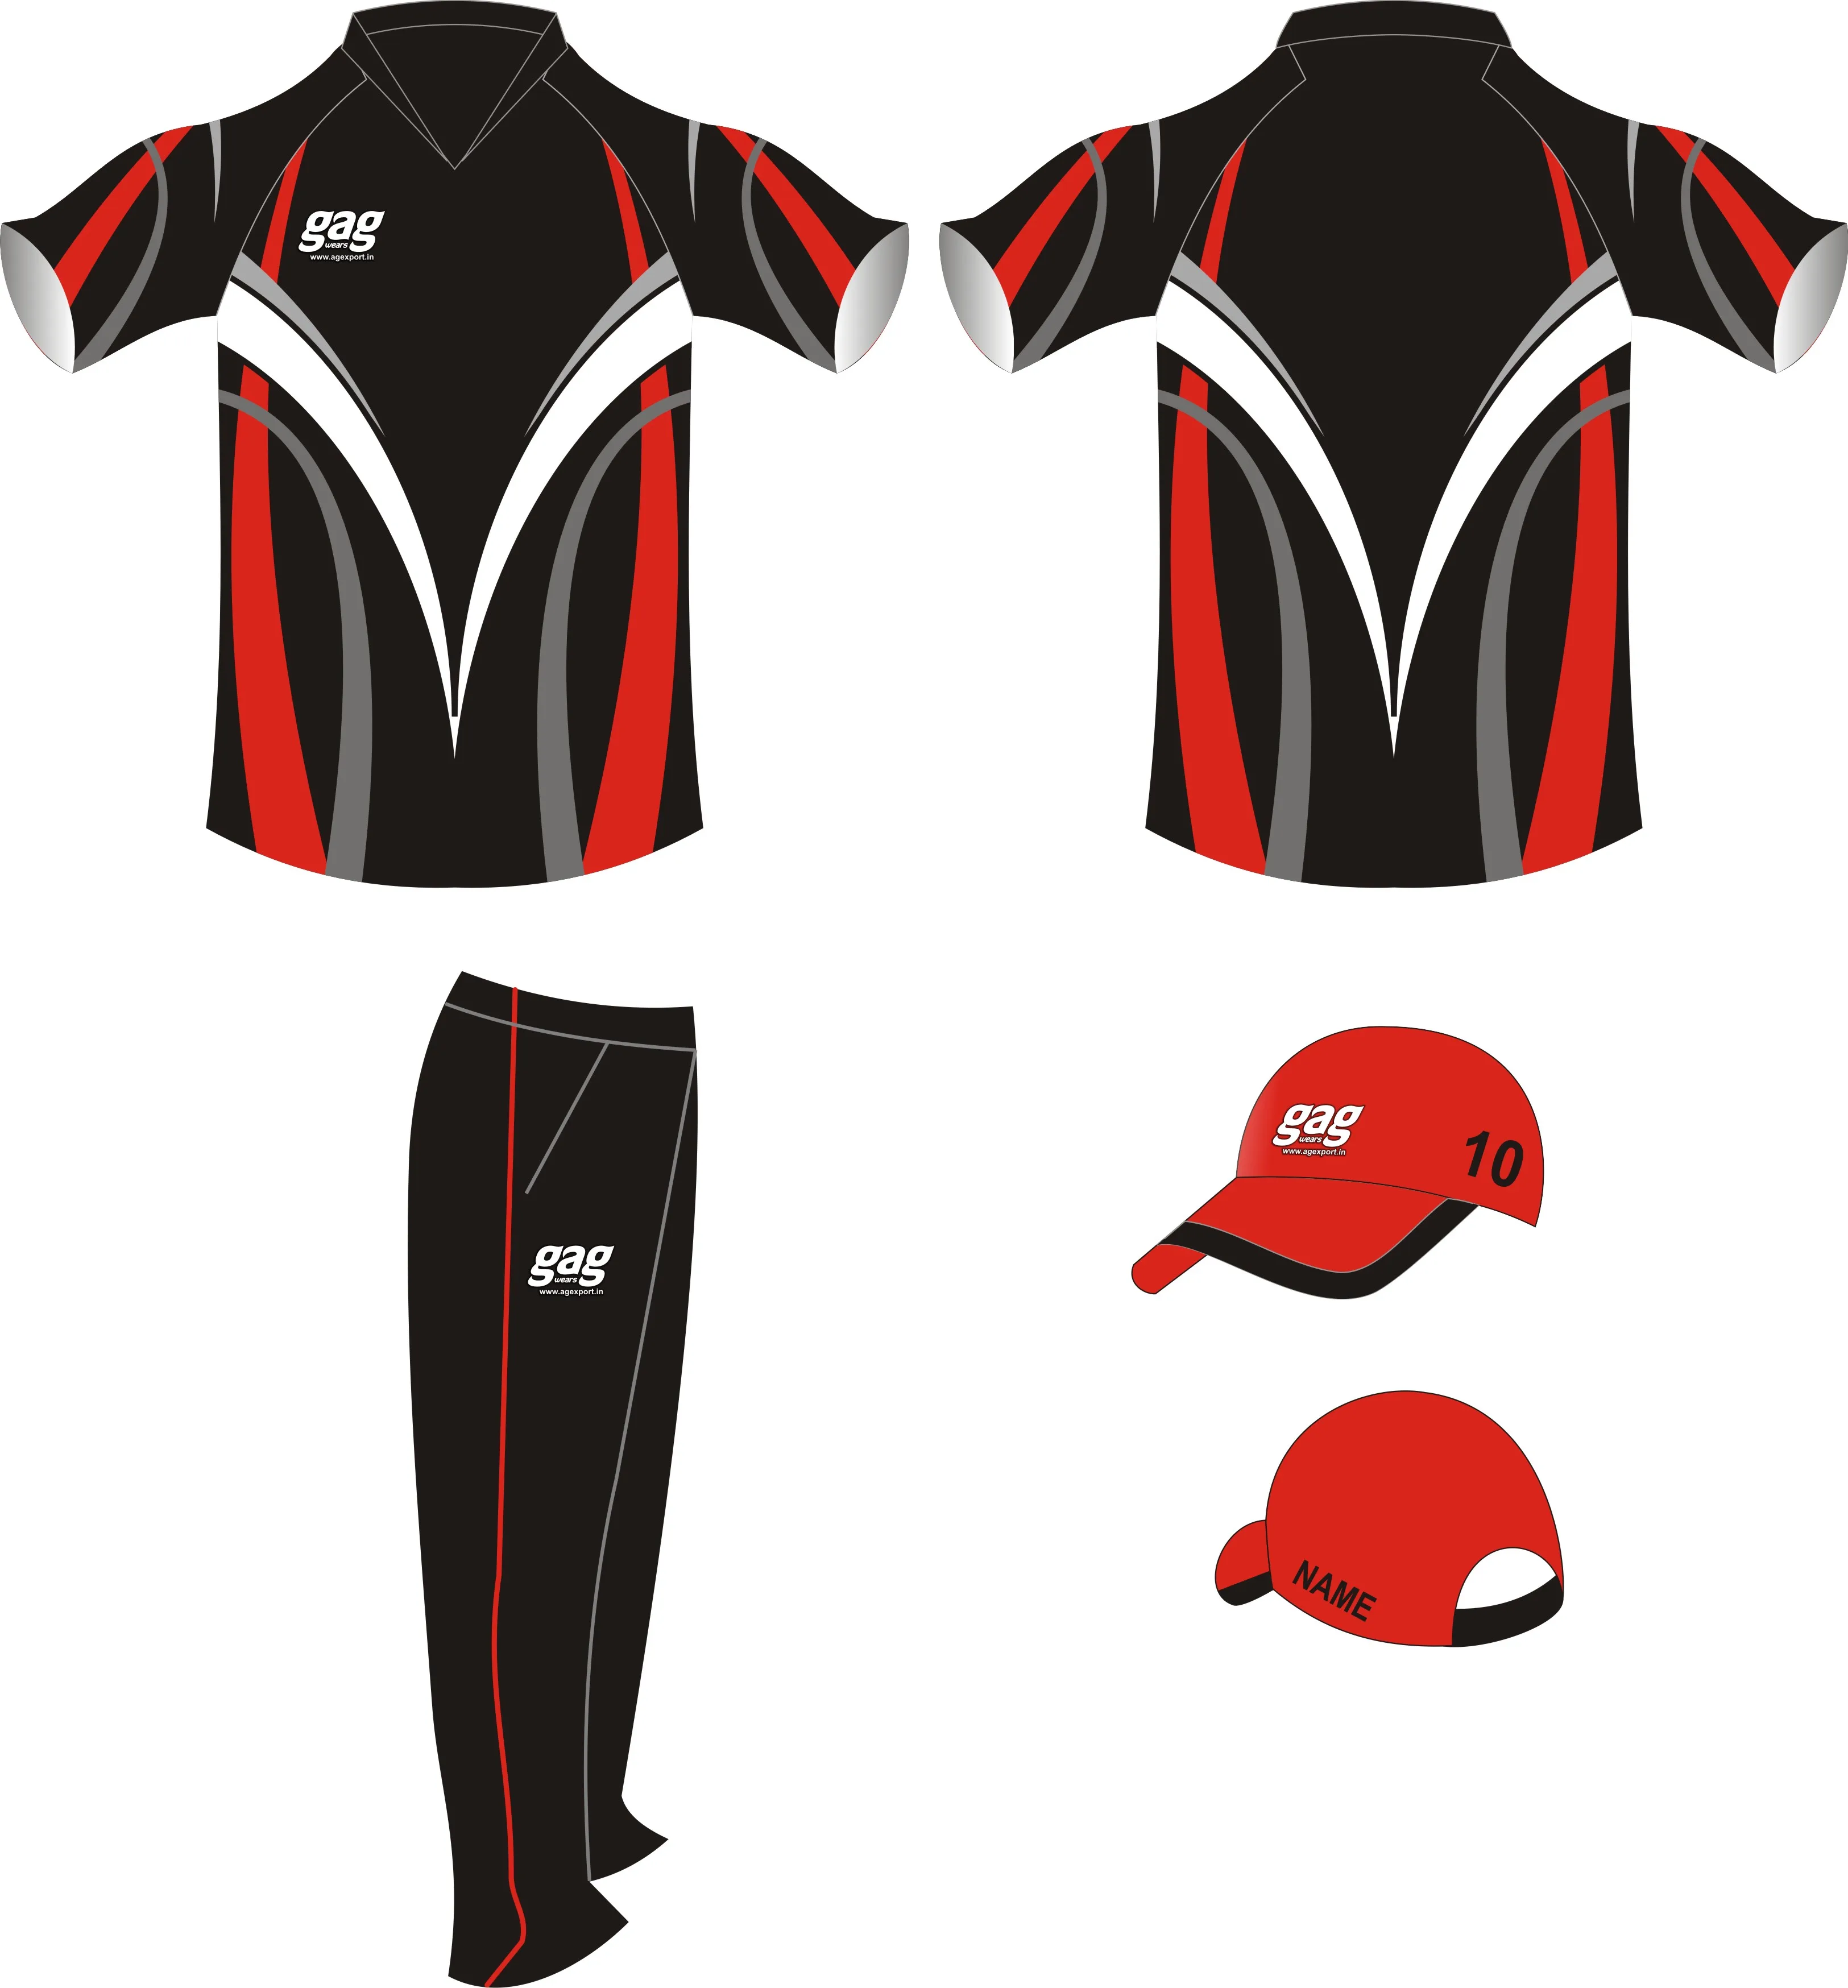 local cricket jersey design